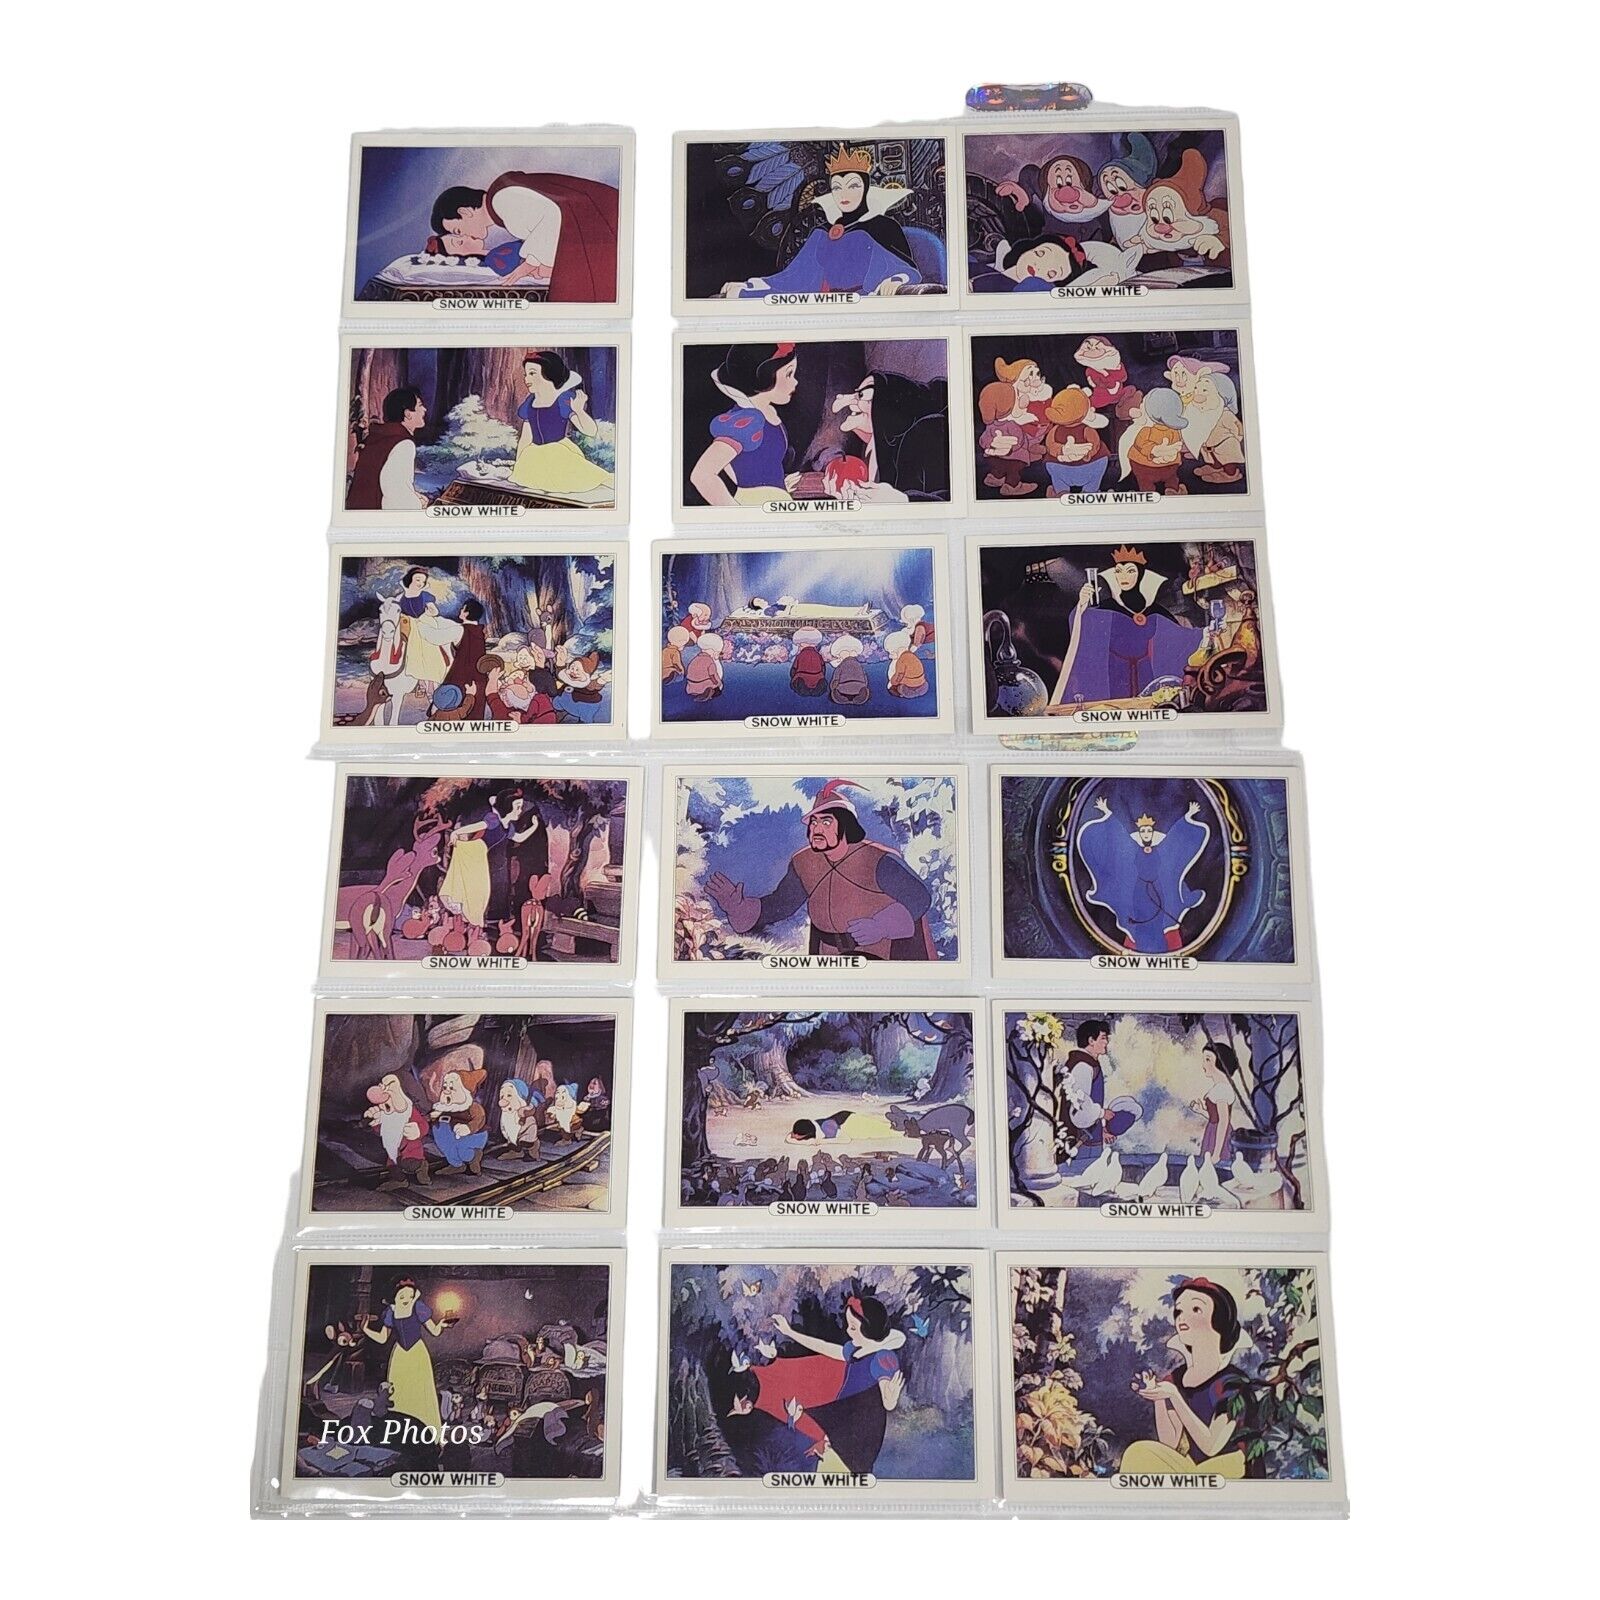 Disney Snow White Trading Cards Complete Princess Movie Scene Set 1-18 Series A